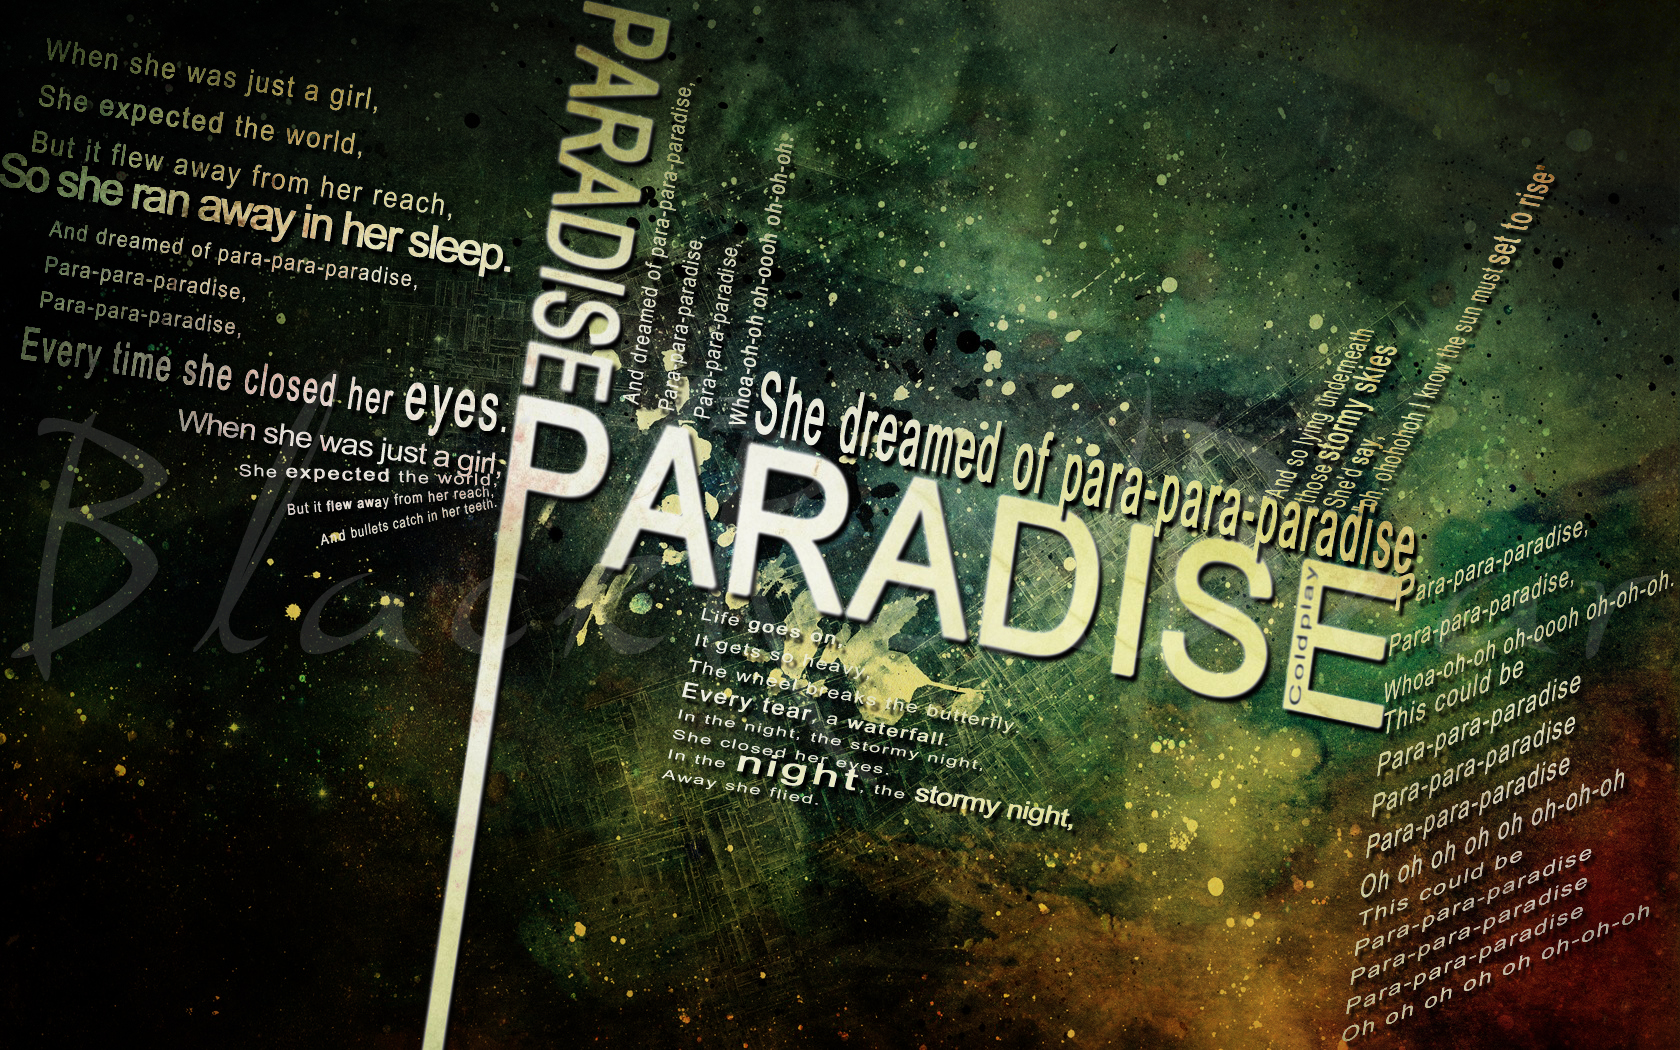 Coldplay - paradise (tradução) HD 